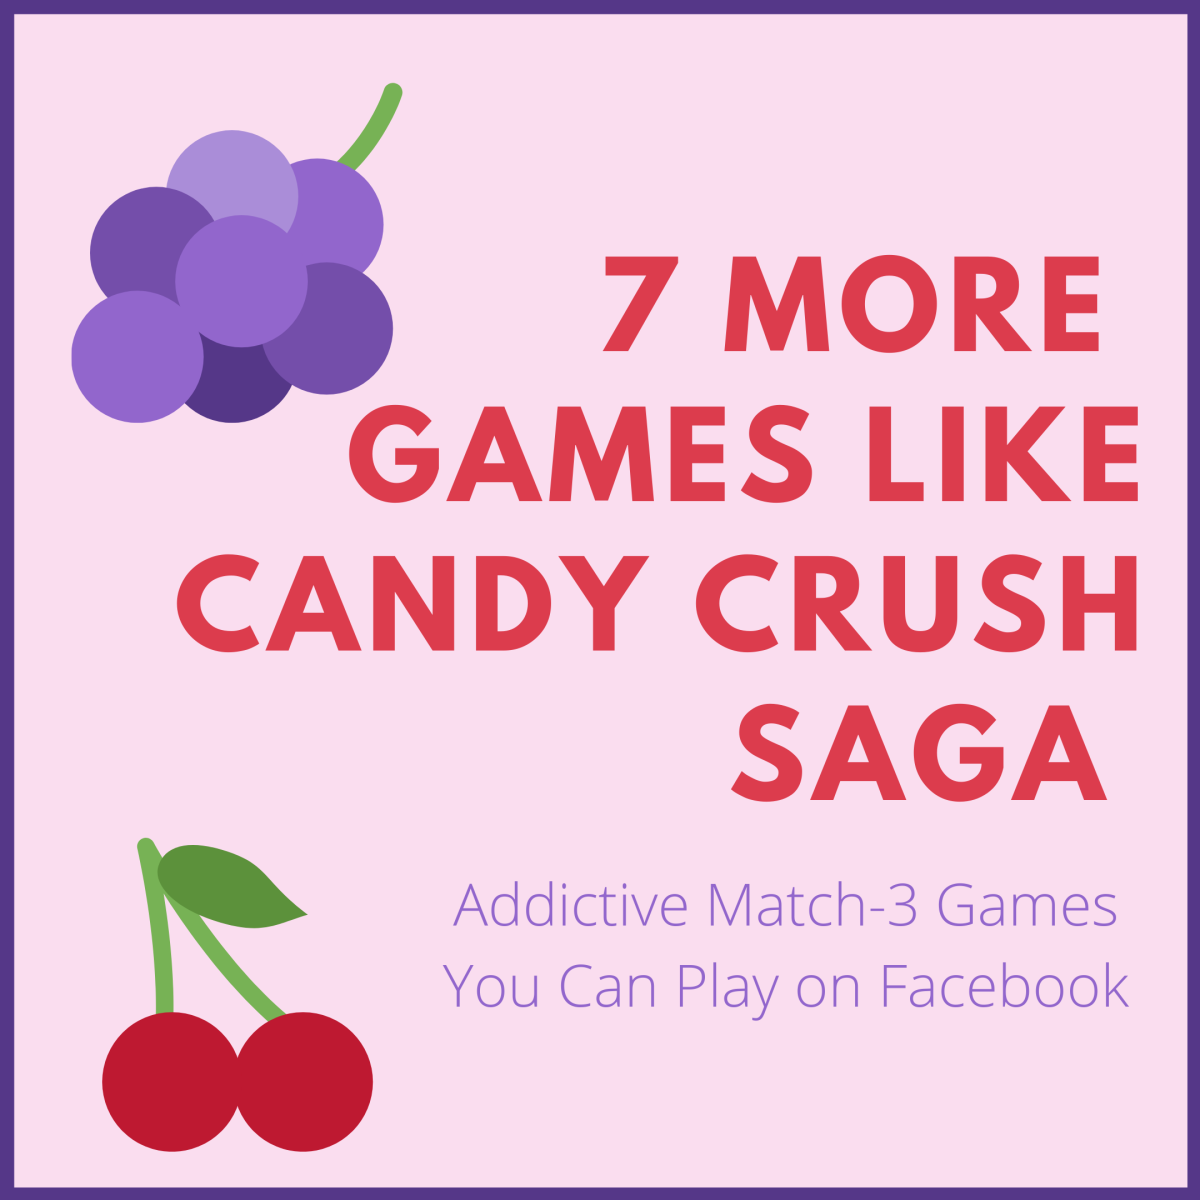 7 Games Like Candy Crush Saga on Facebook